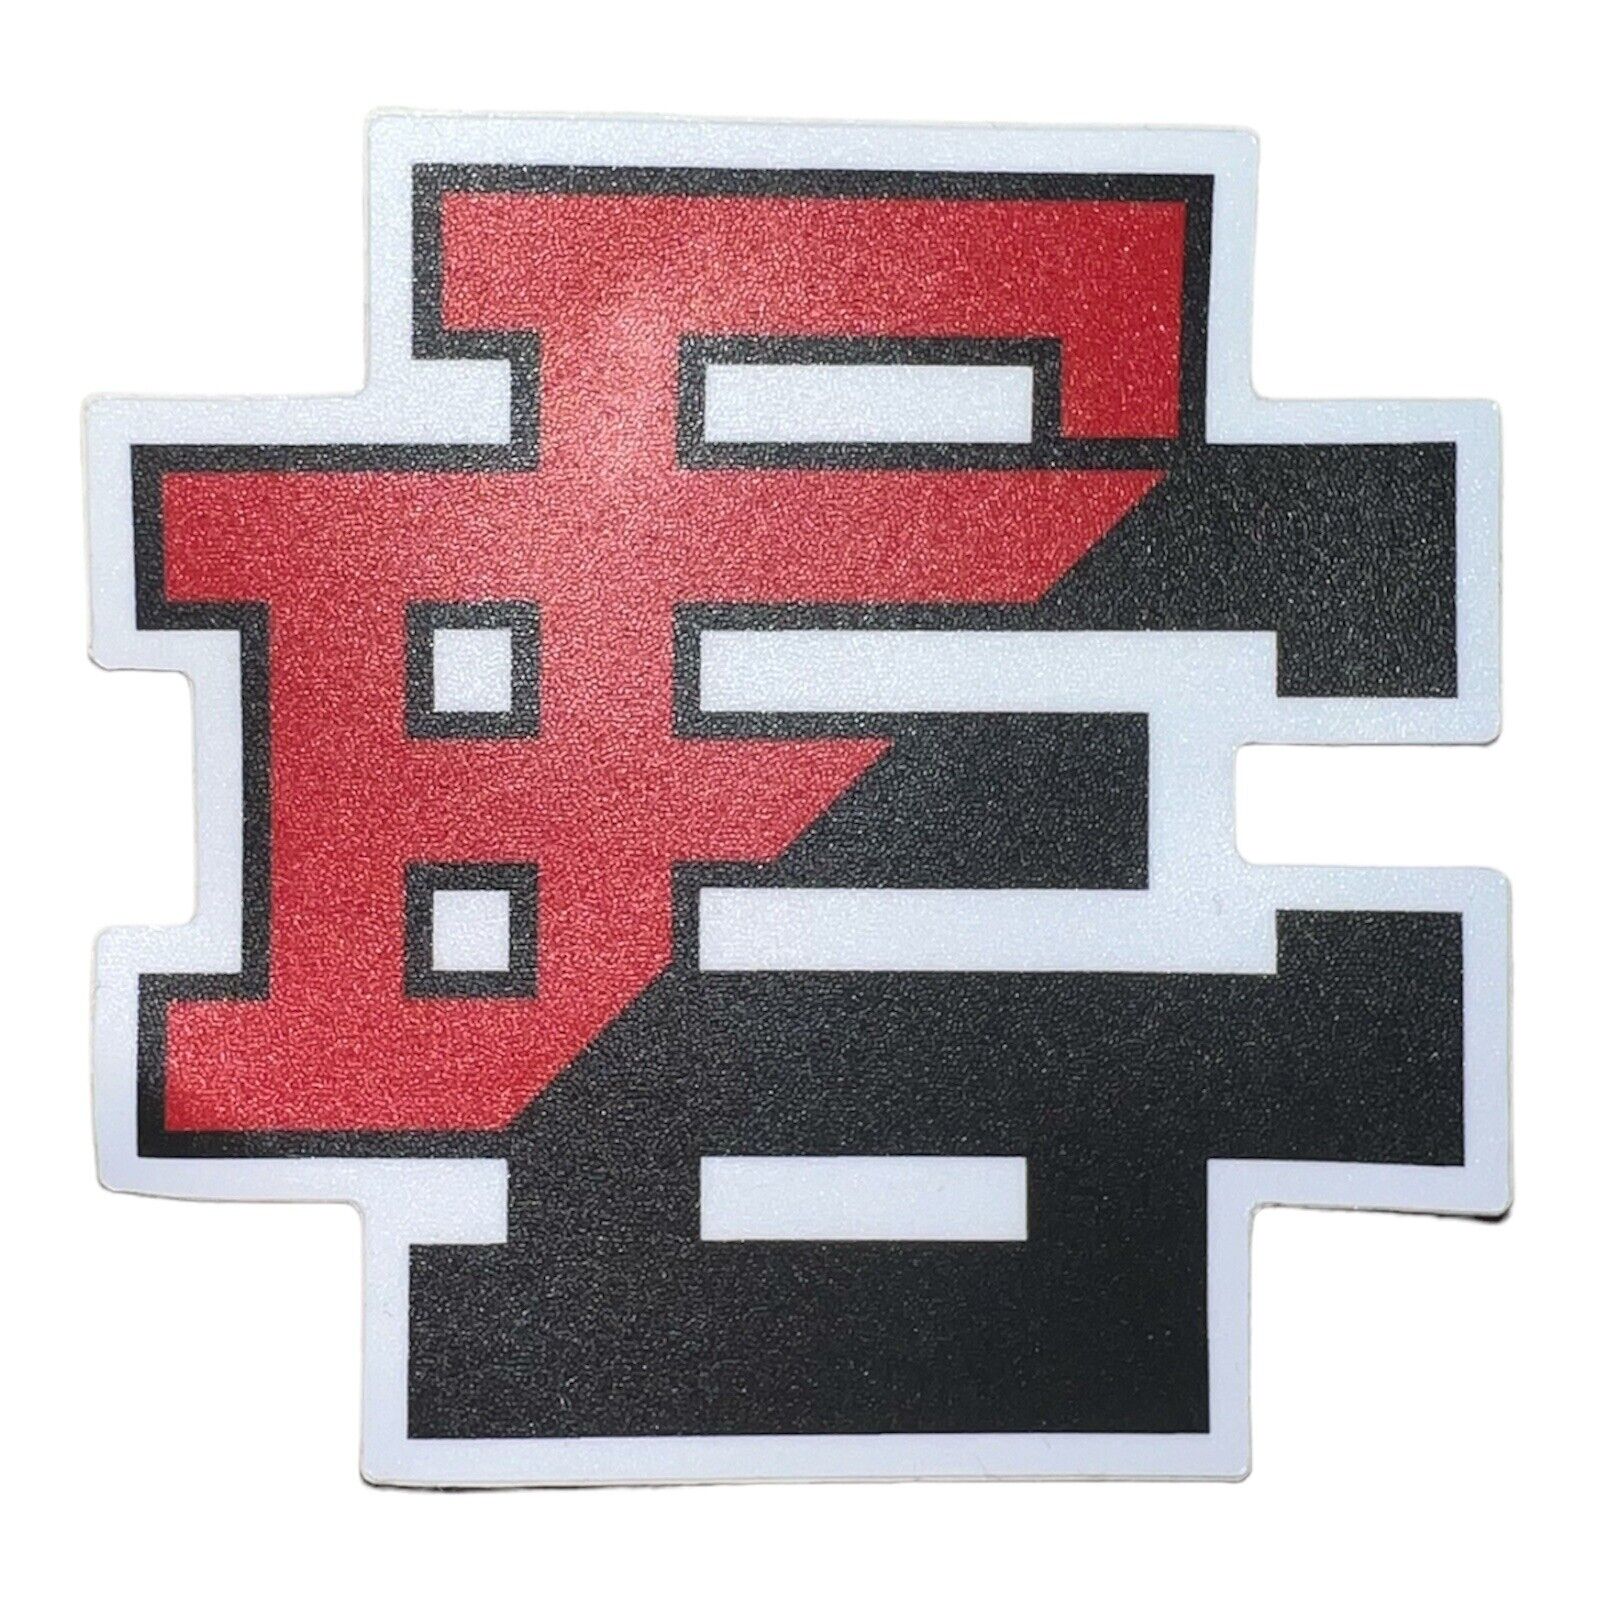 Eric Emanuel Sticker NEW 100% Authentic Red Black RARE